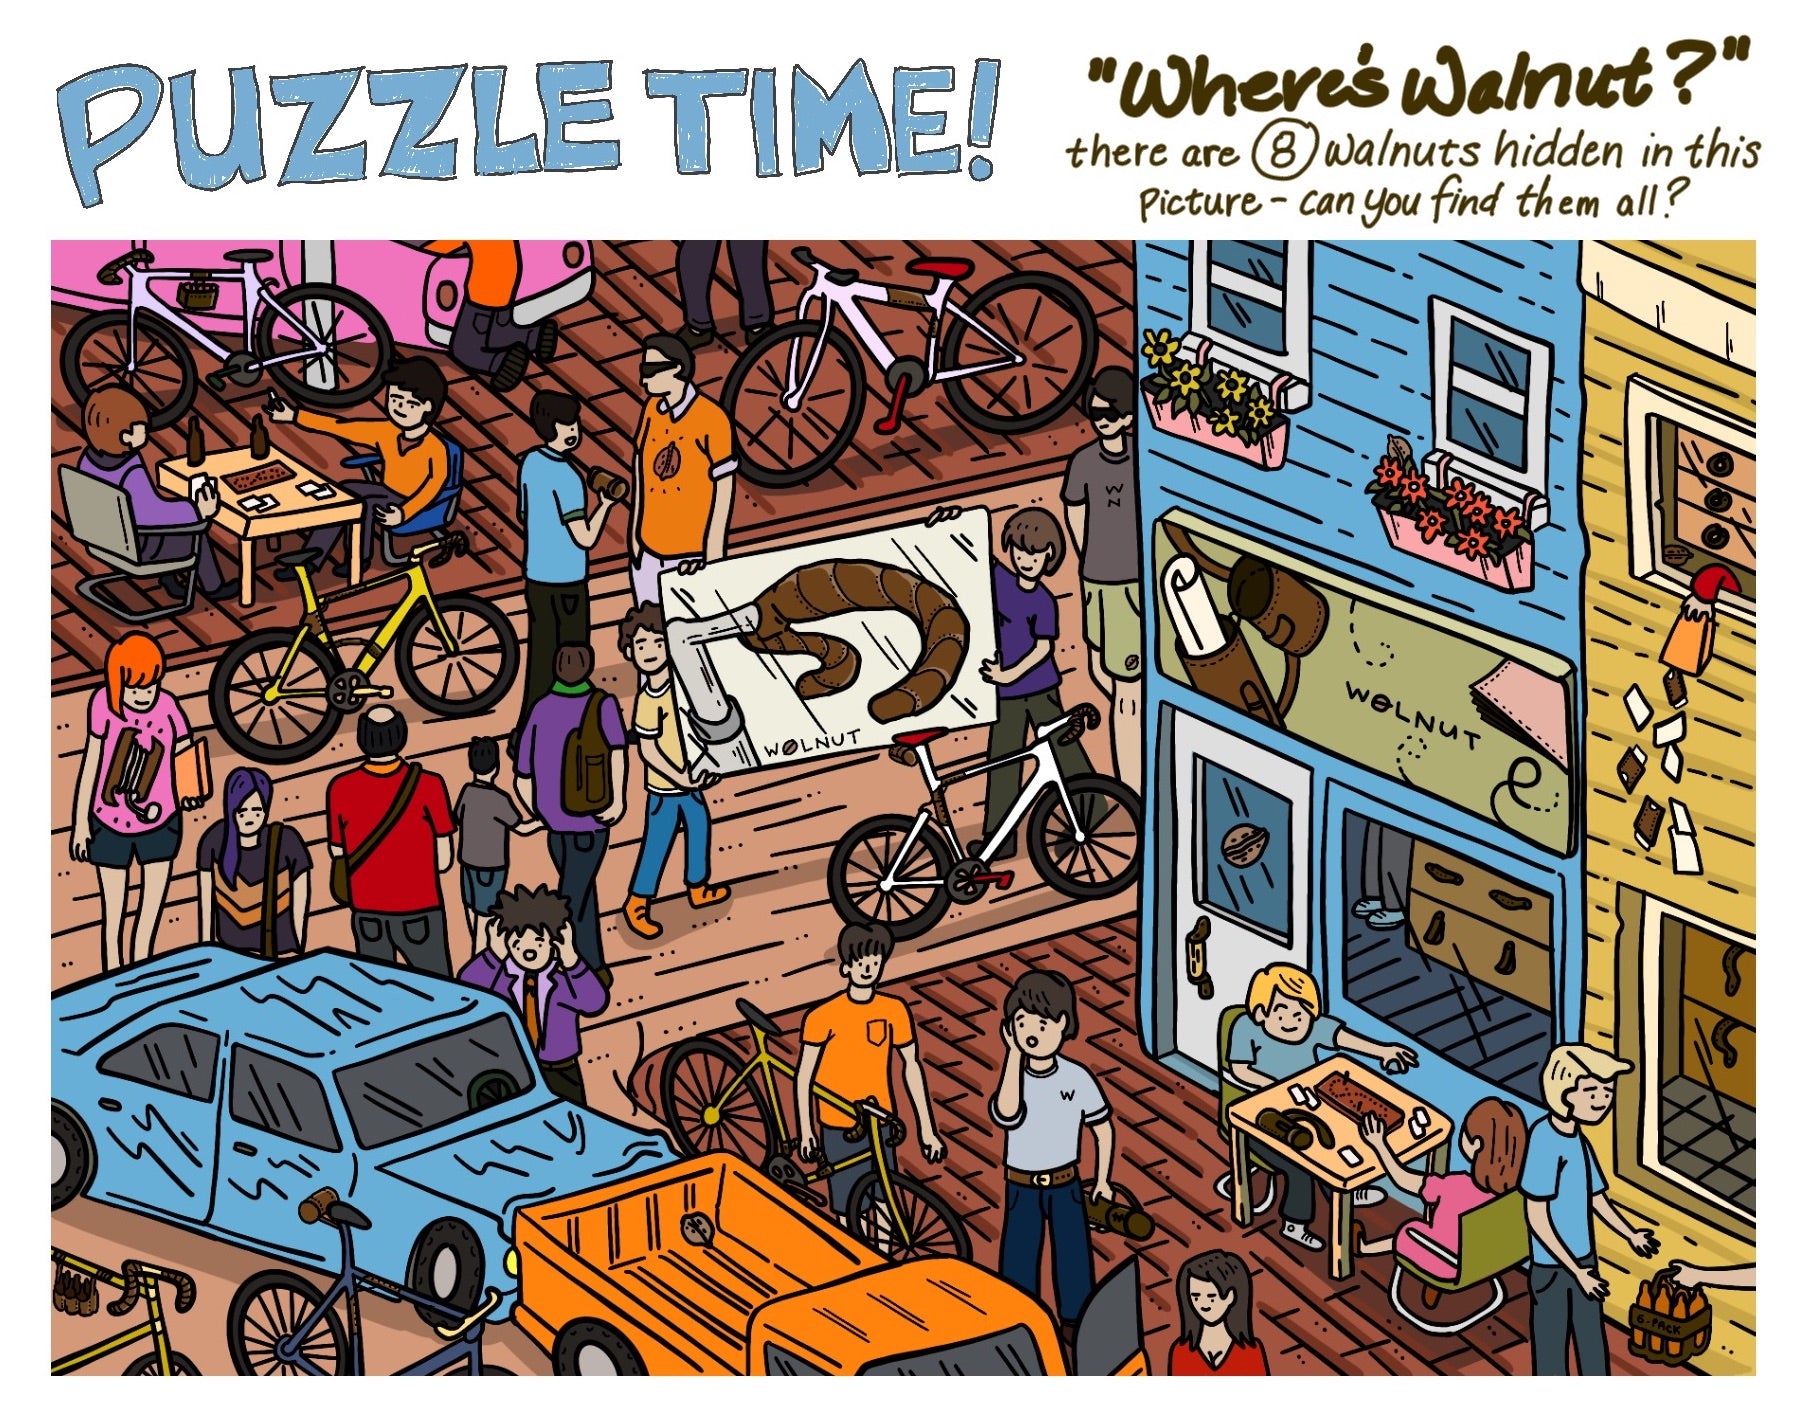 New Free Puzzle: "Where's Walnut?" Cartoon Search